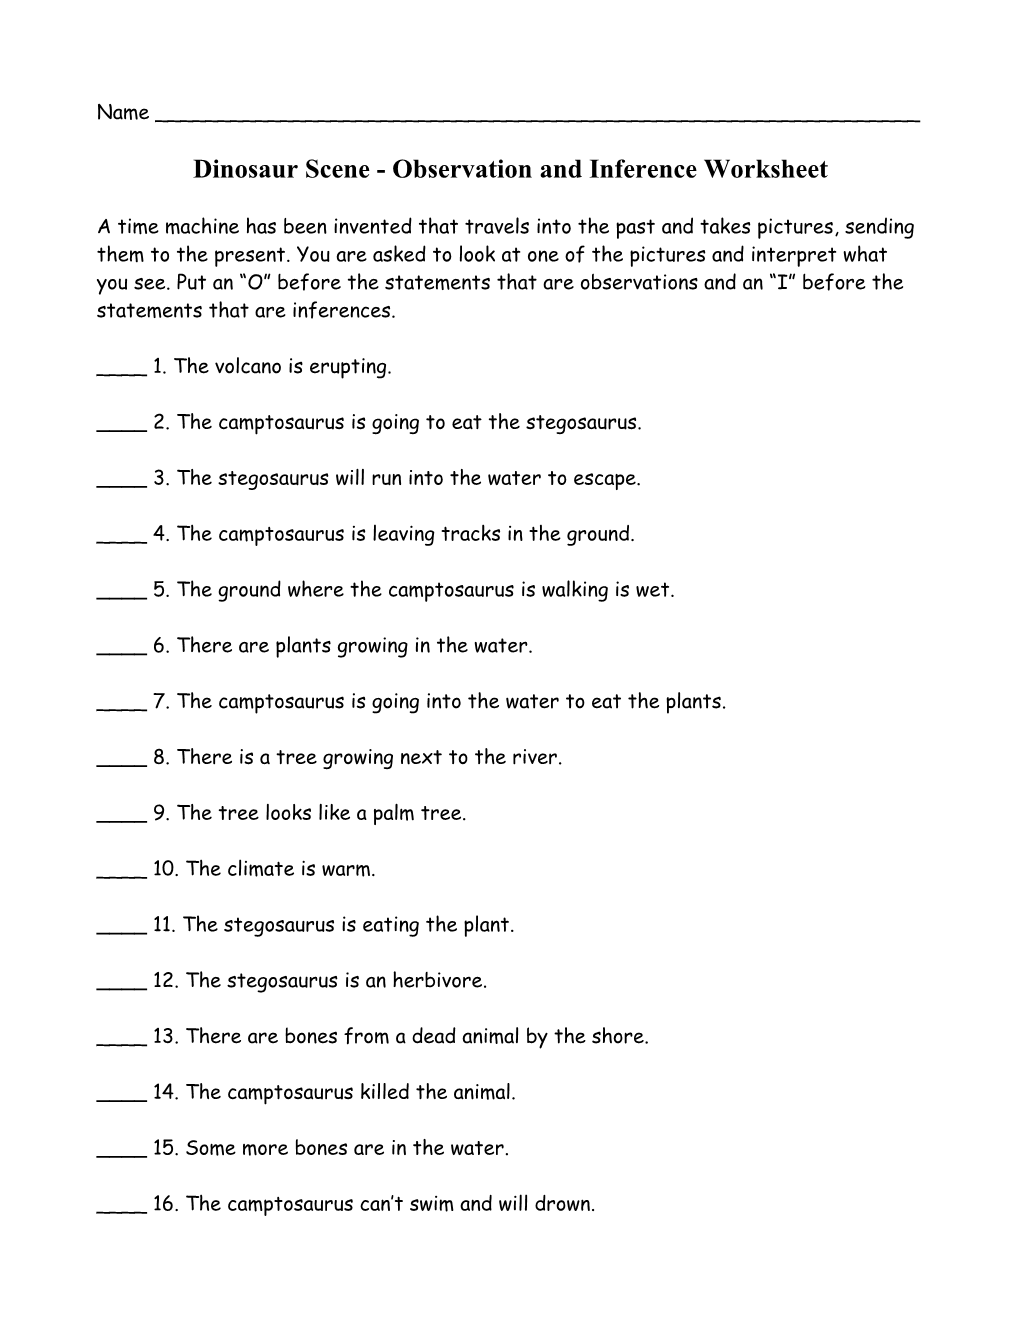 Dinosaur Scene - Observation and Inference Worksheet